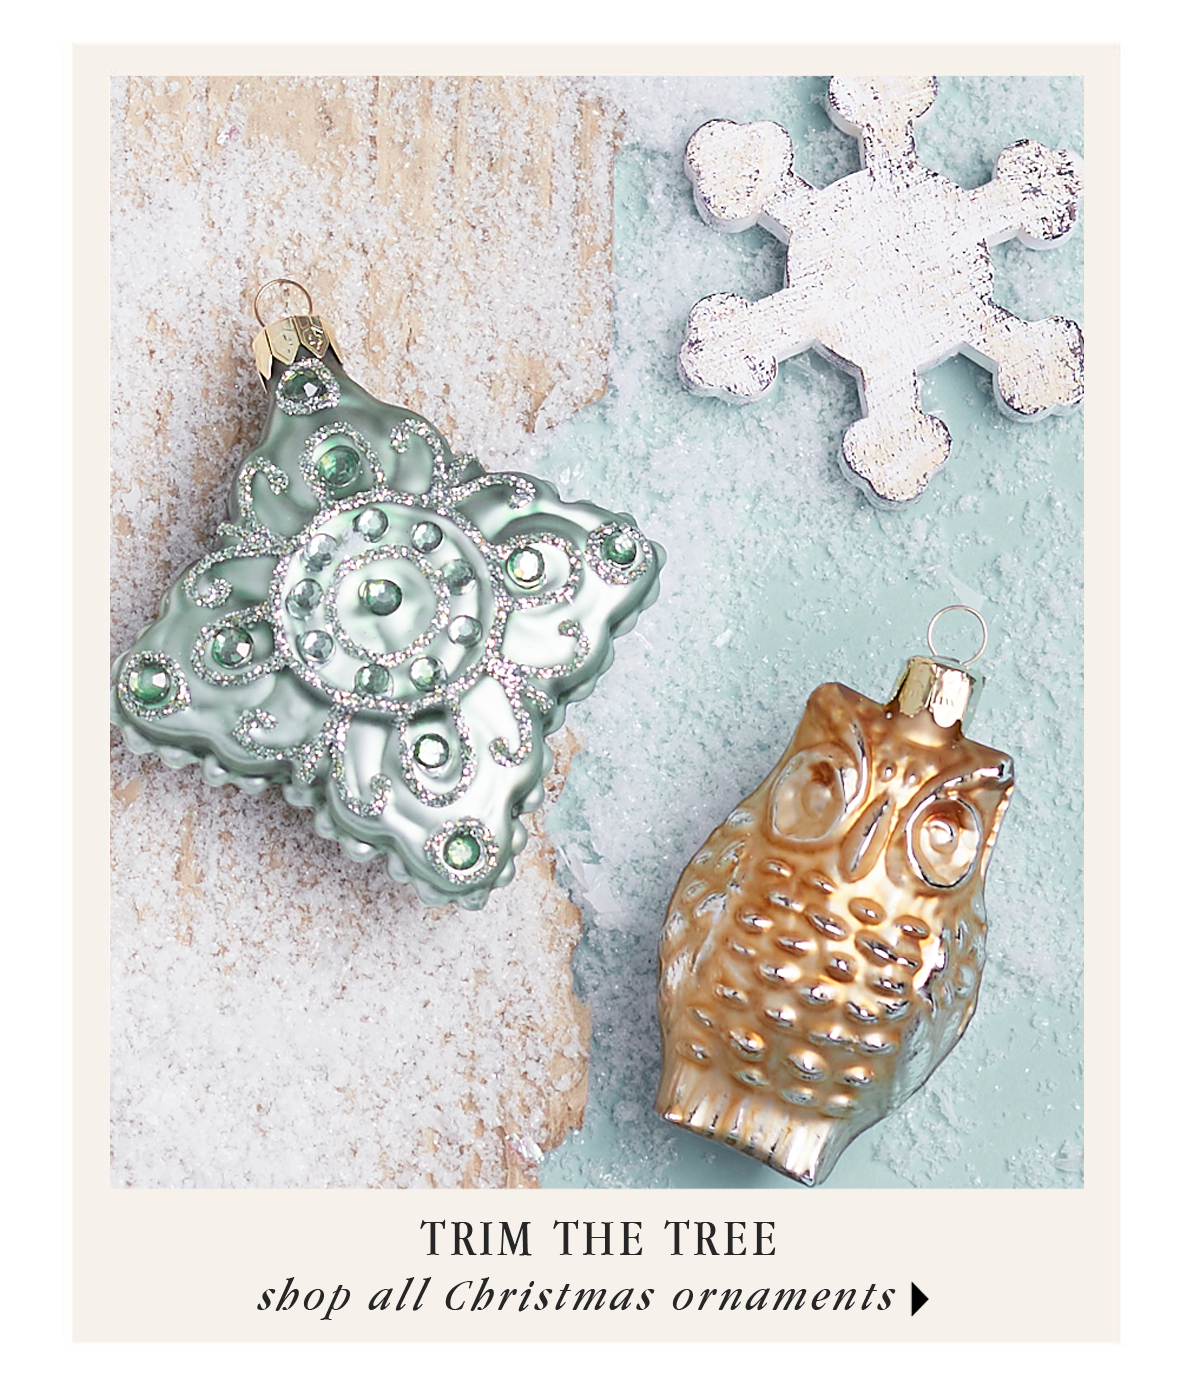 Trim the tree, shop all Christmas ornaments.